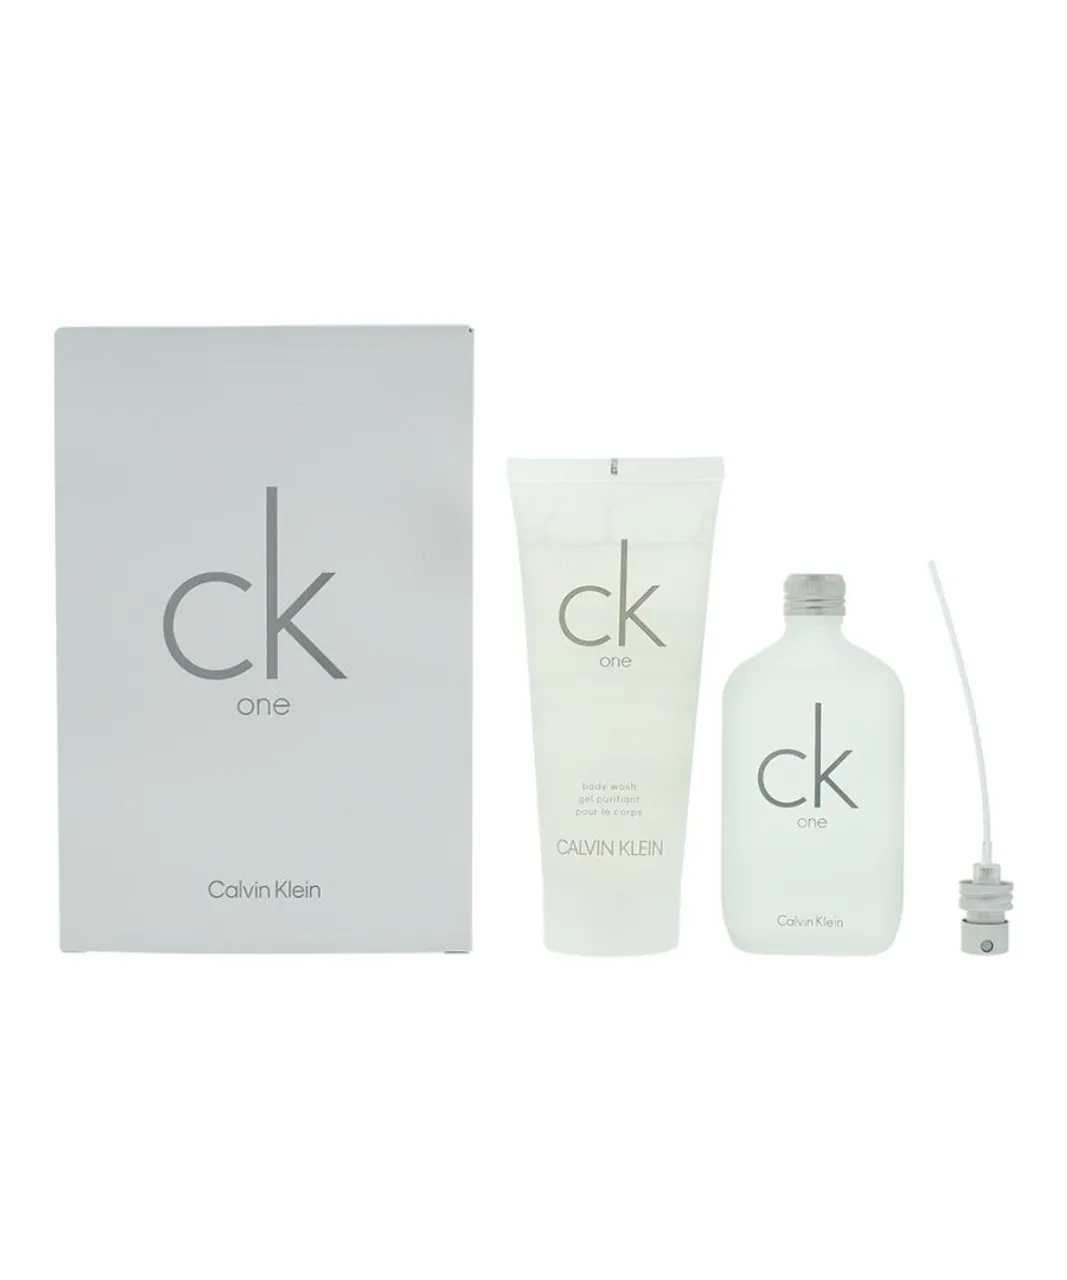 Calvin Klein Unisex Ck One Eau de Toilette 50ml + Shower Gel 100ml Gift Set - One Size